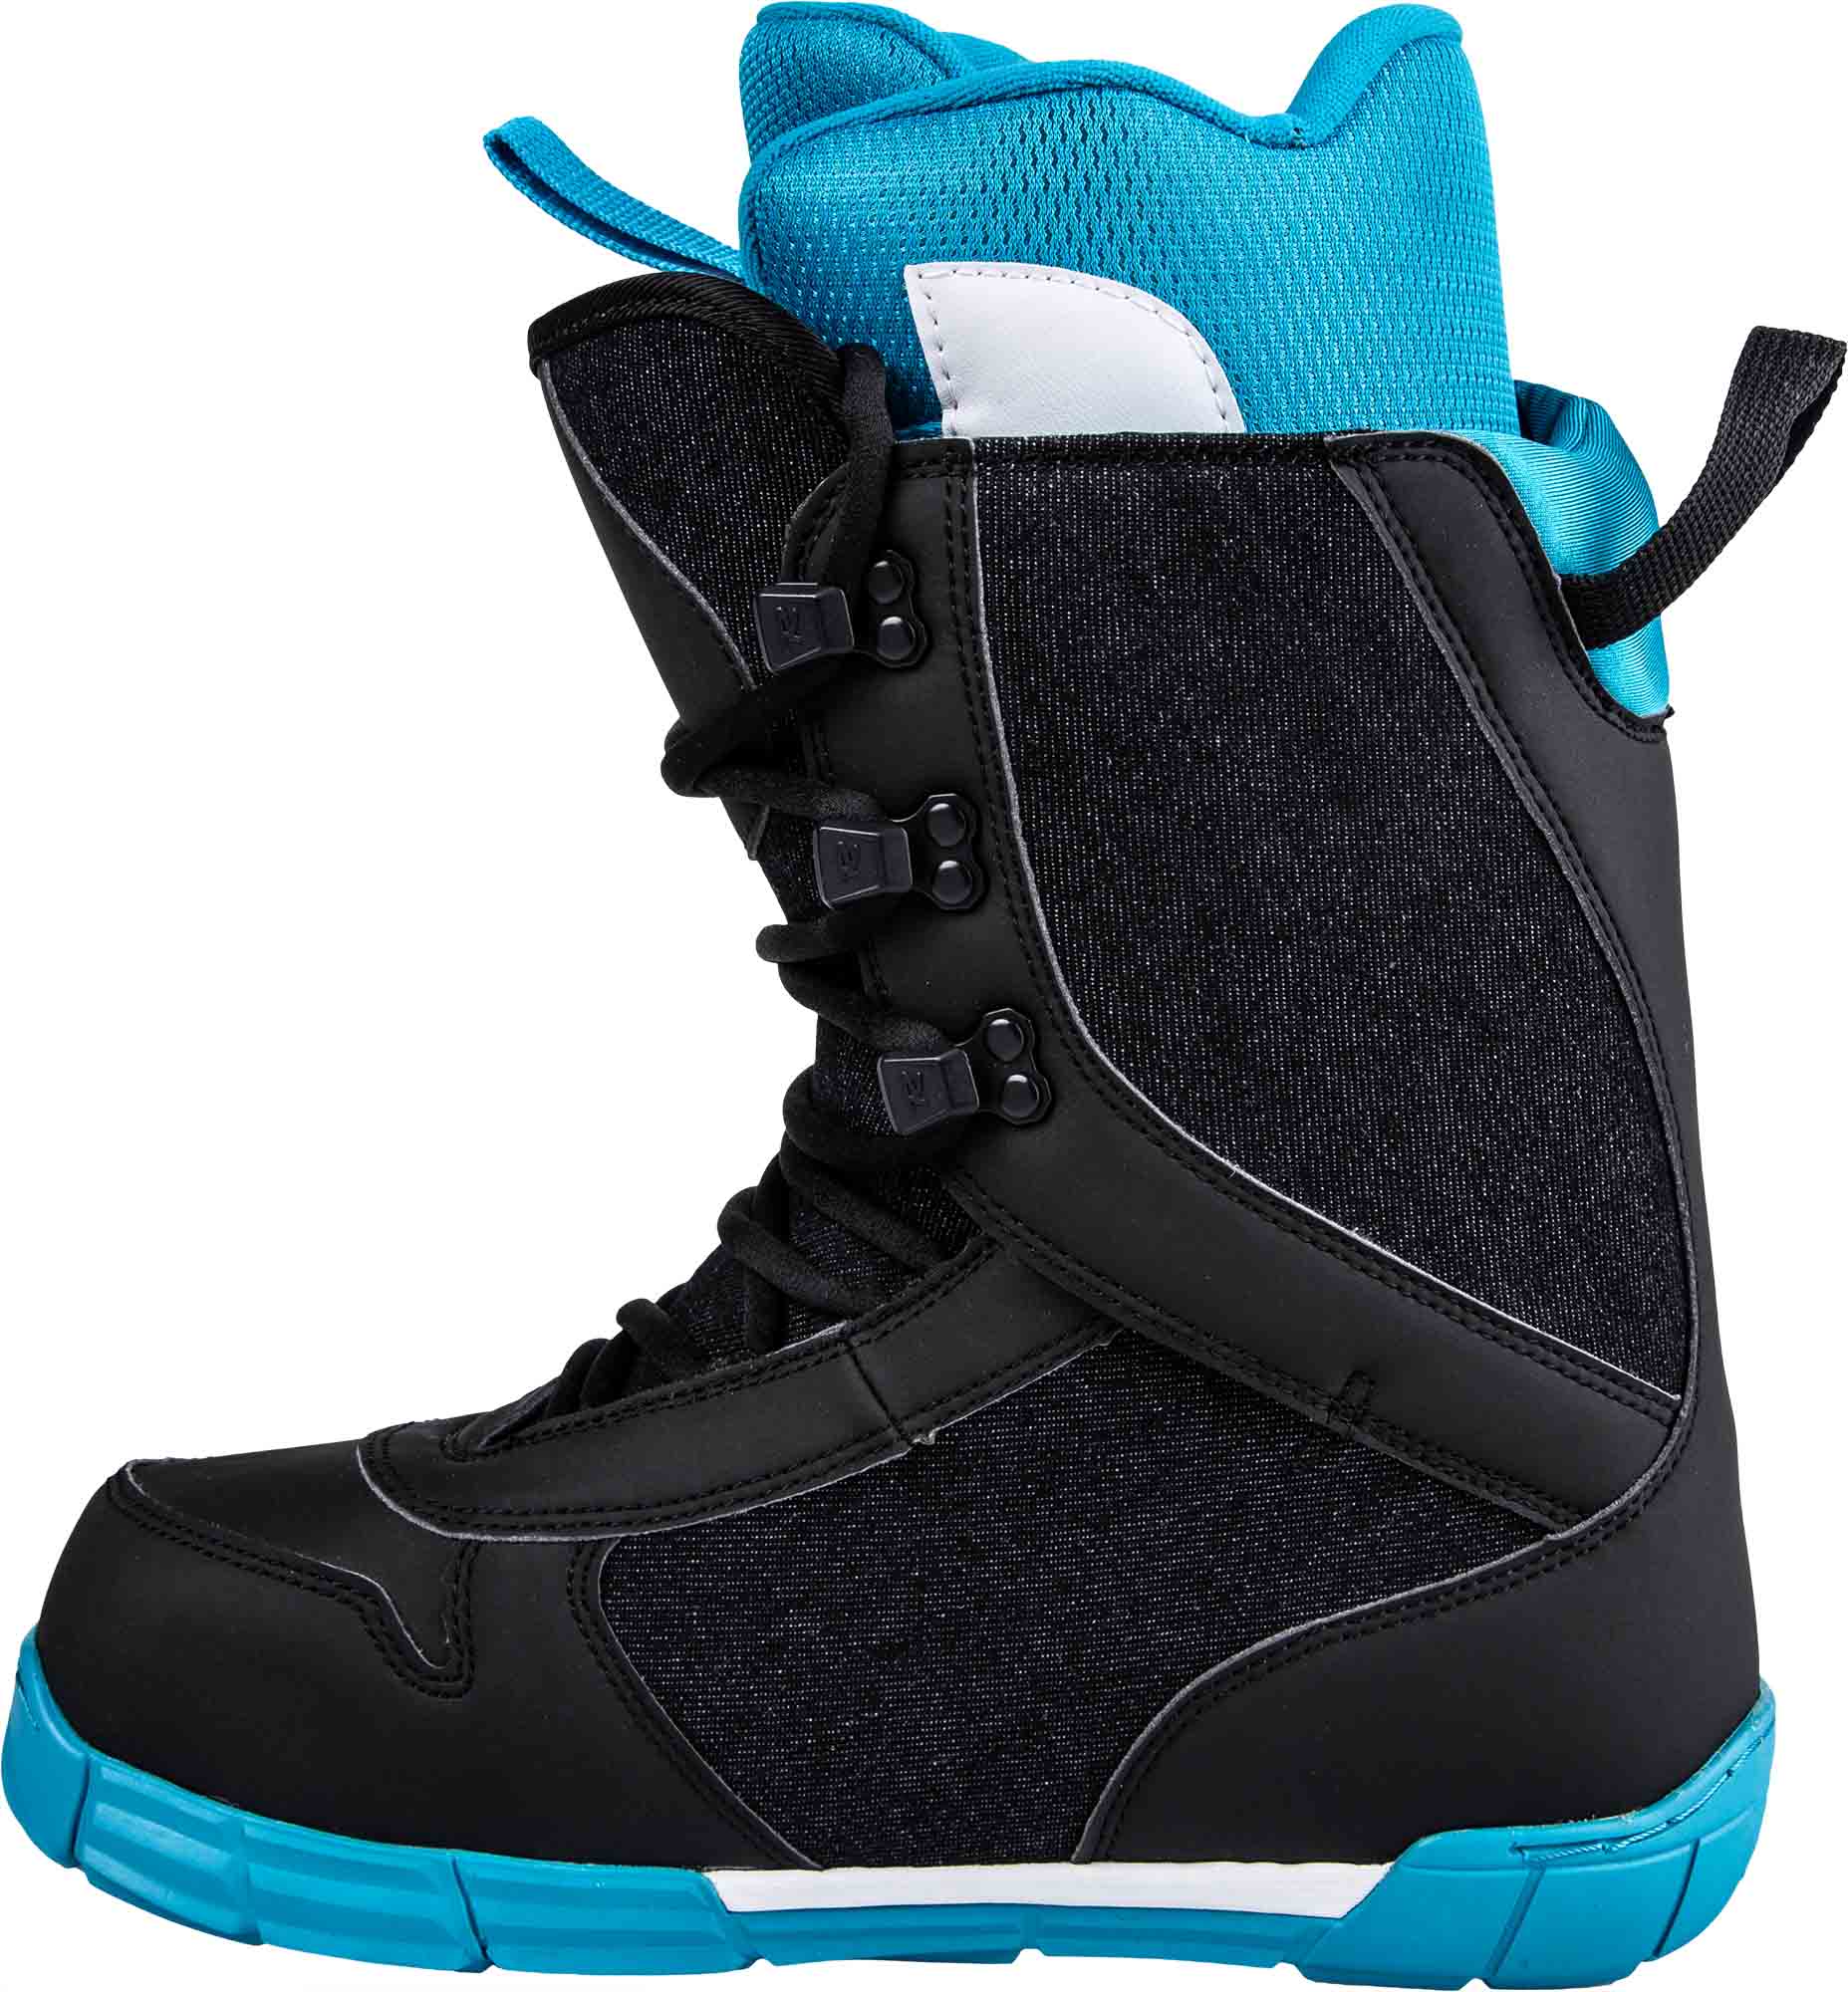 Women’s snowboard boots